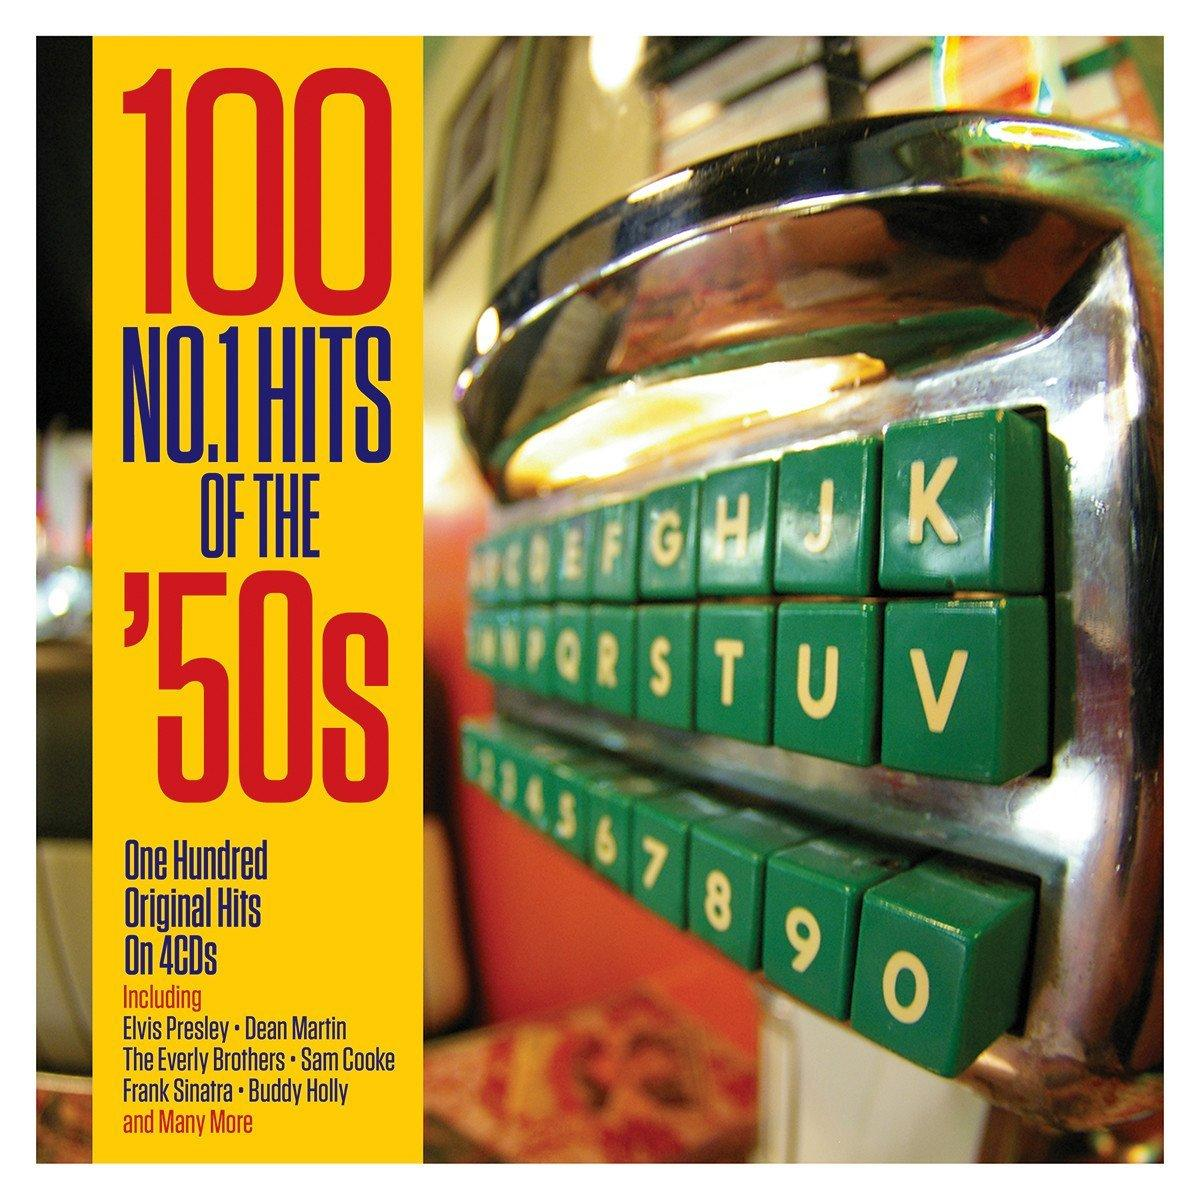 VARIOUS - 100 No.1 Of - the 50s (CD) Hits